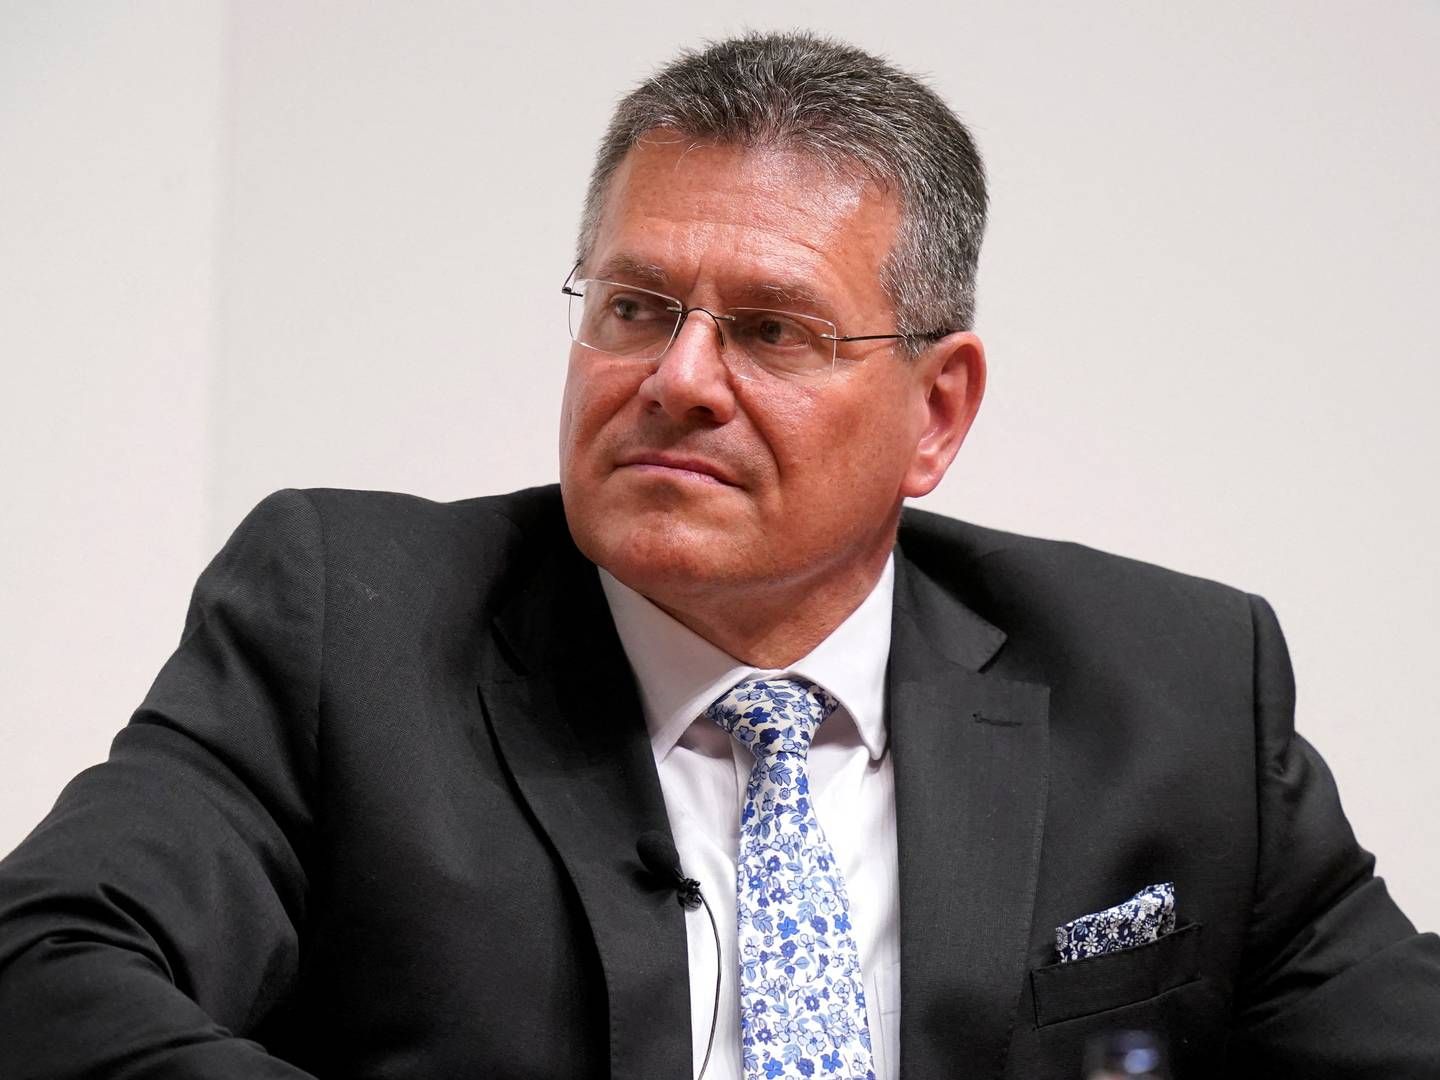 Næstformand i Europa-Kommissionen Maros Sefcovic. | Foto: Pool